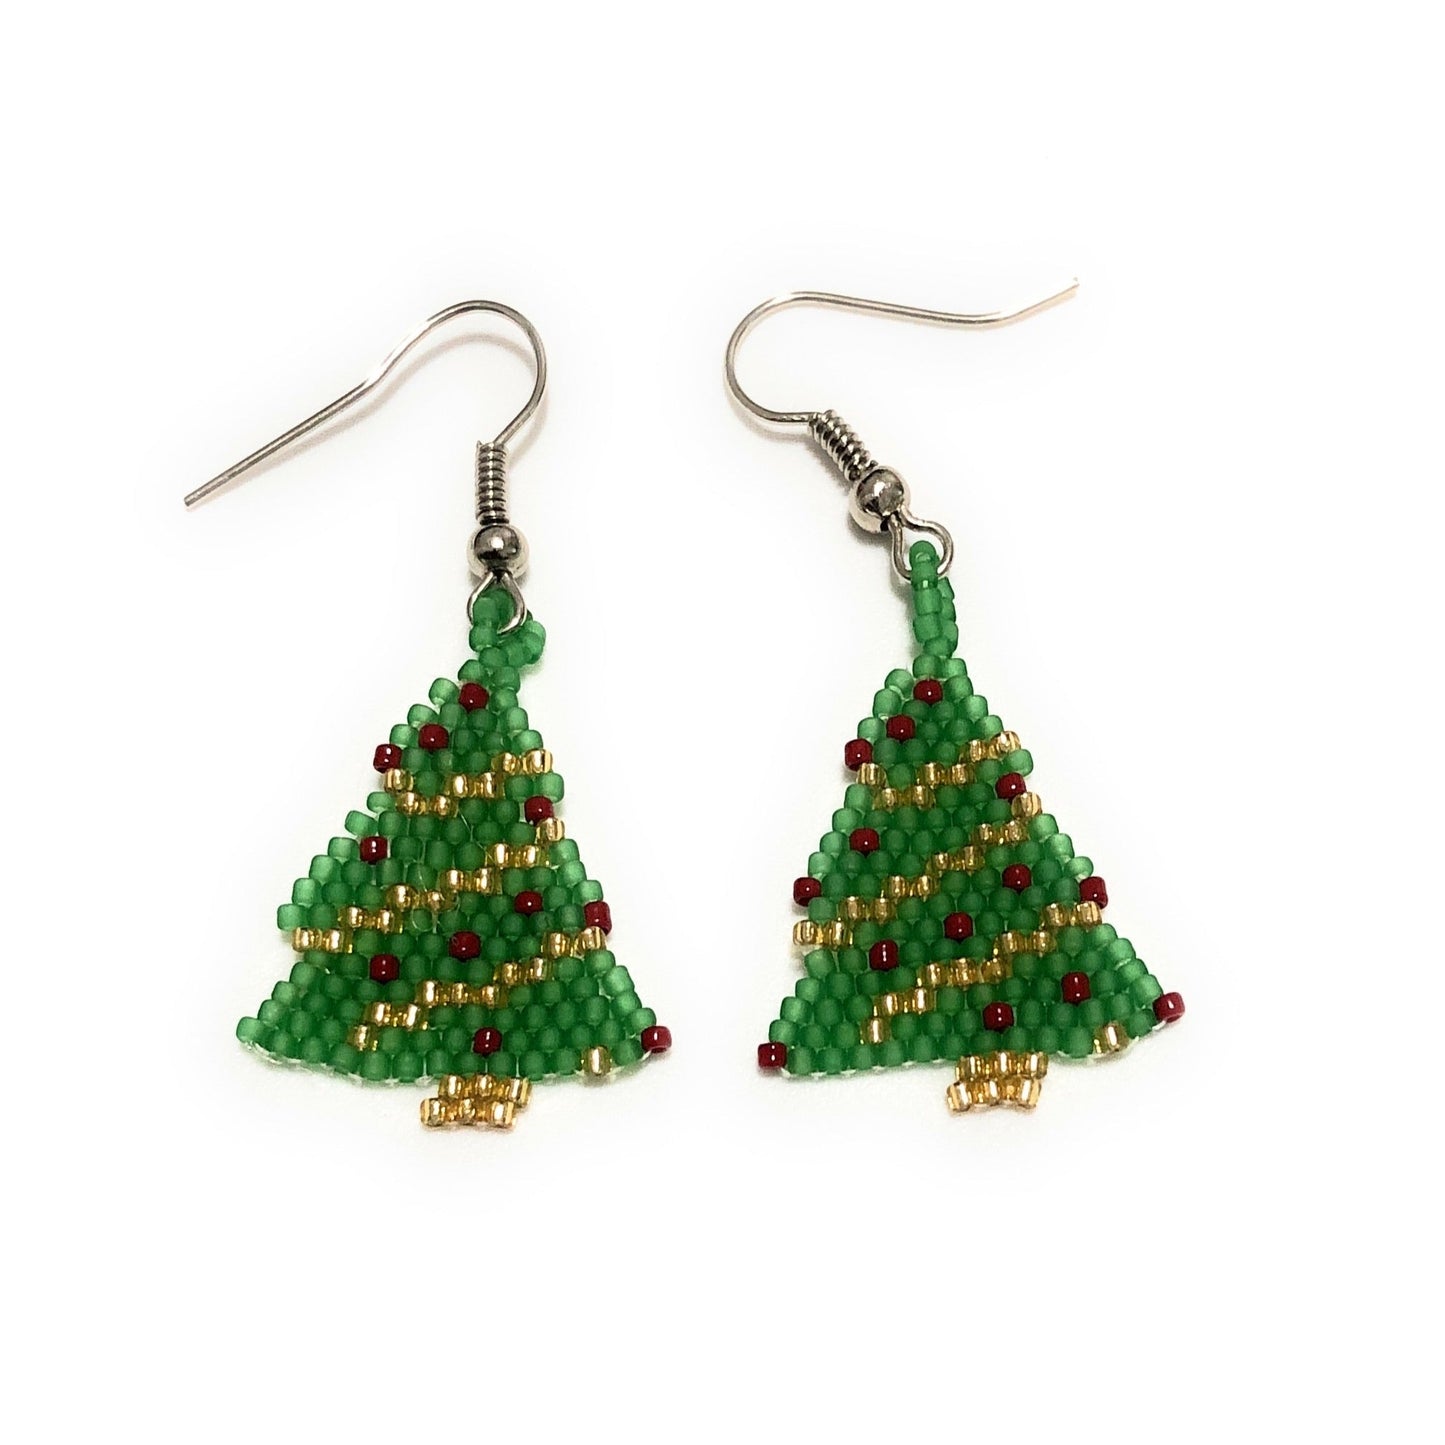 Stainless Steel Christmas Tree Ornament Earrings